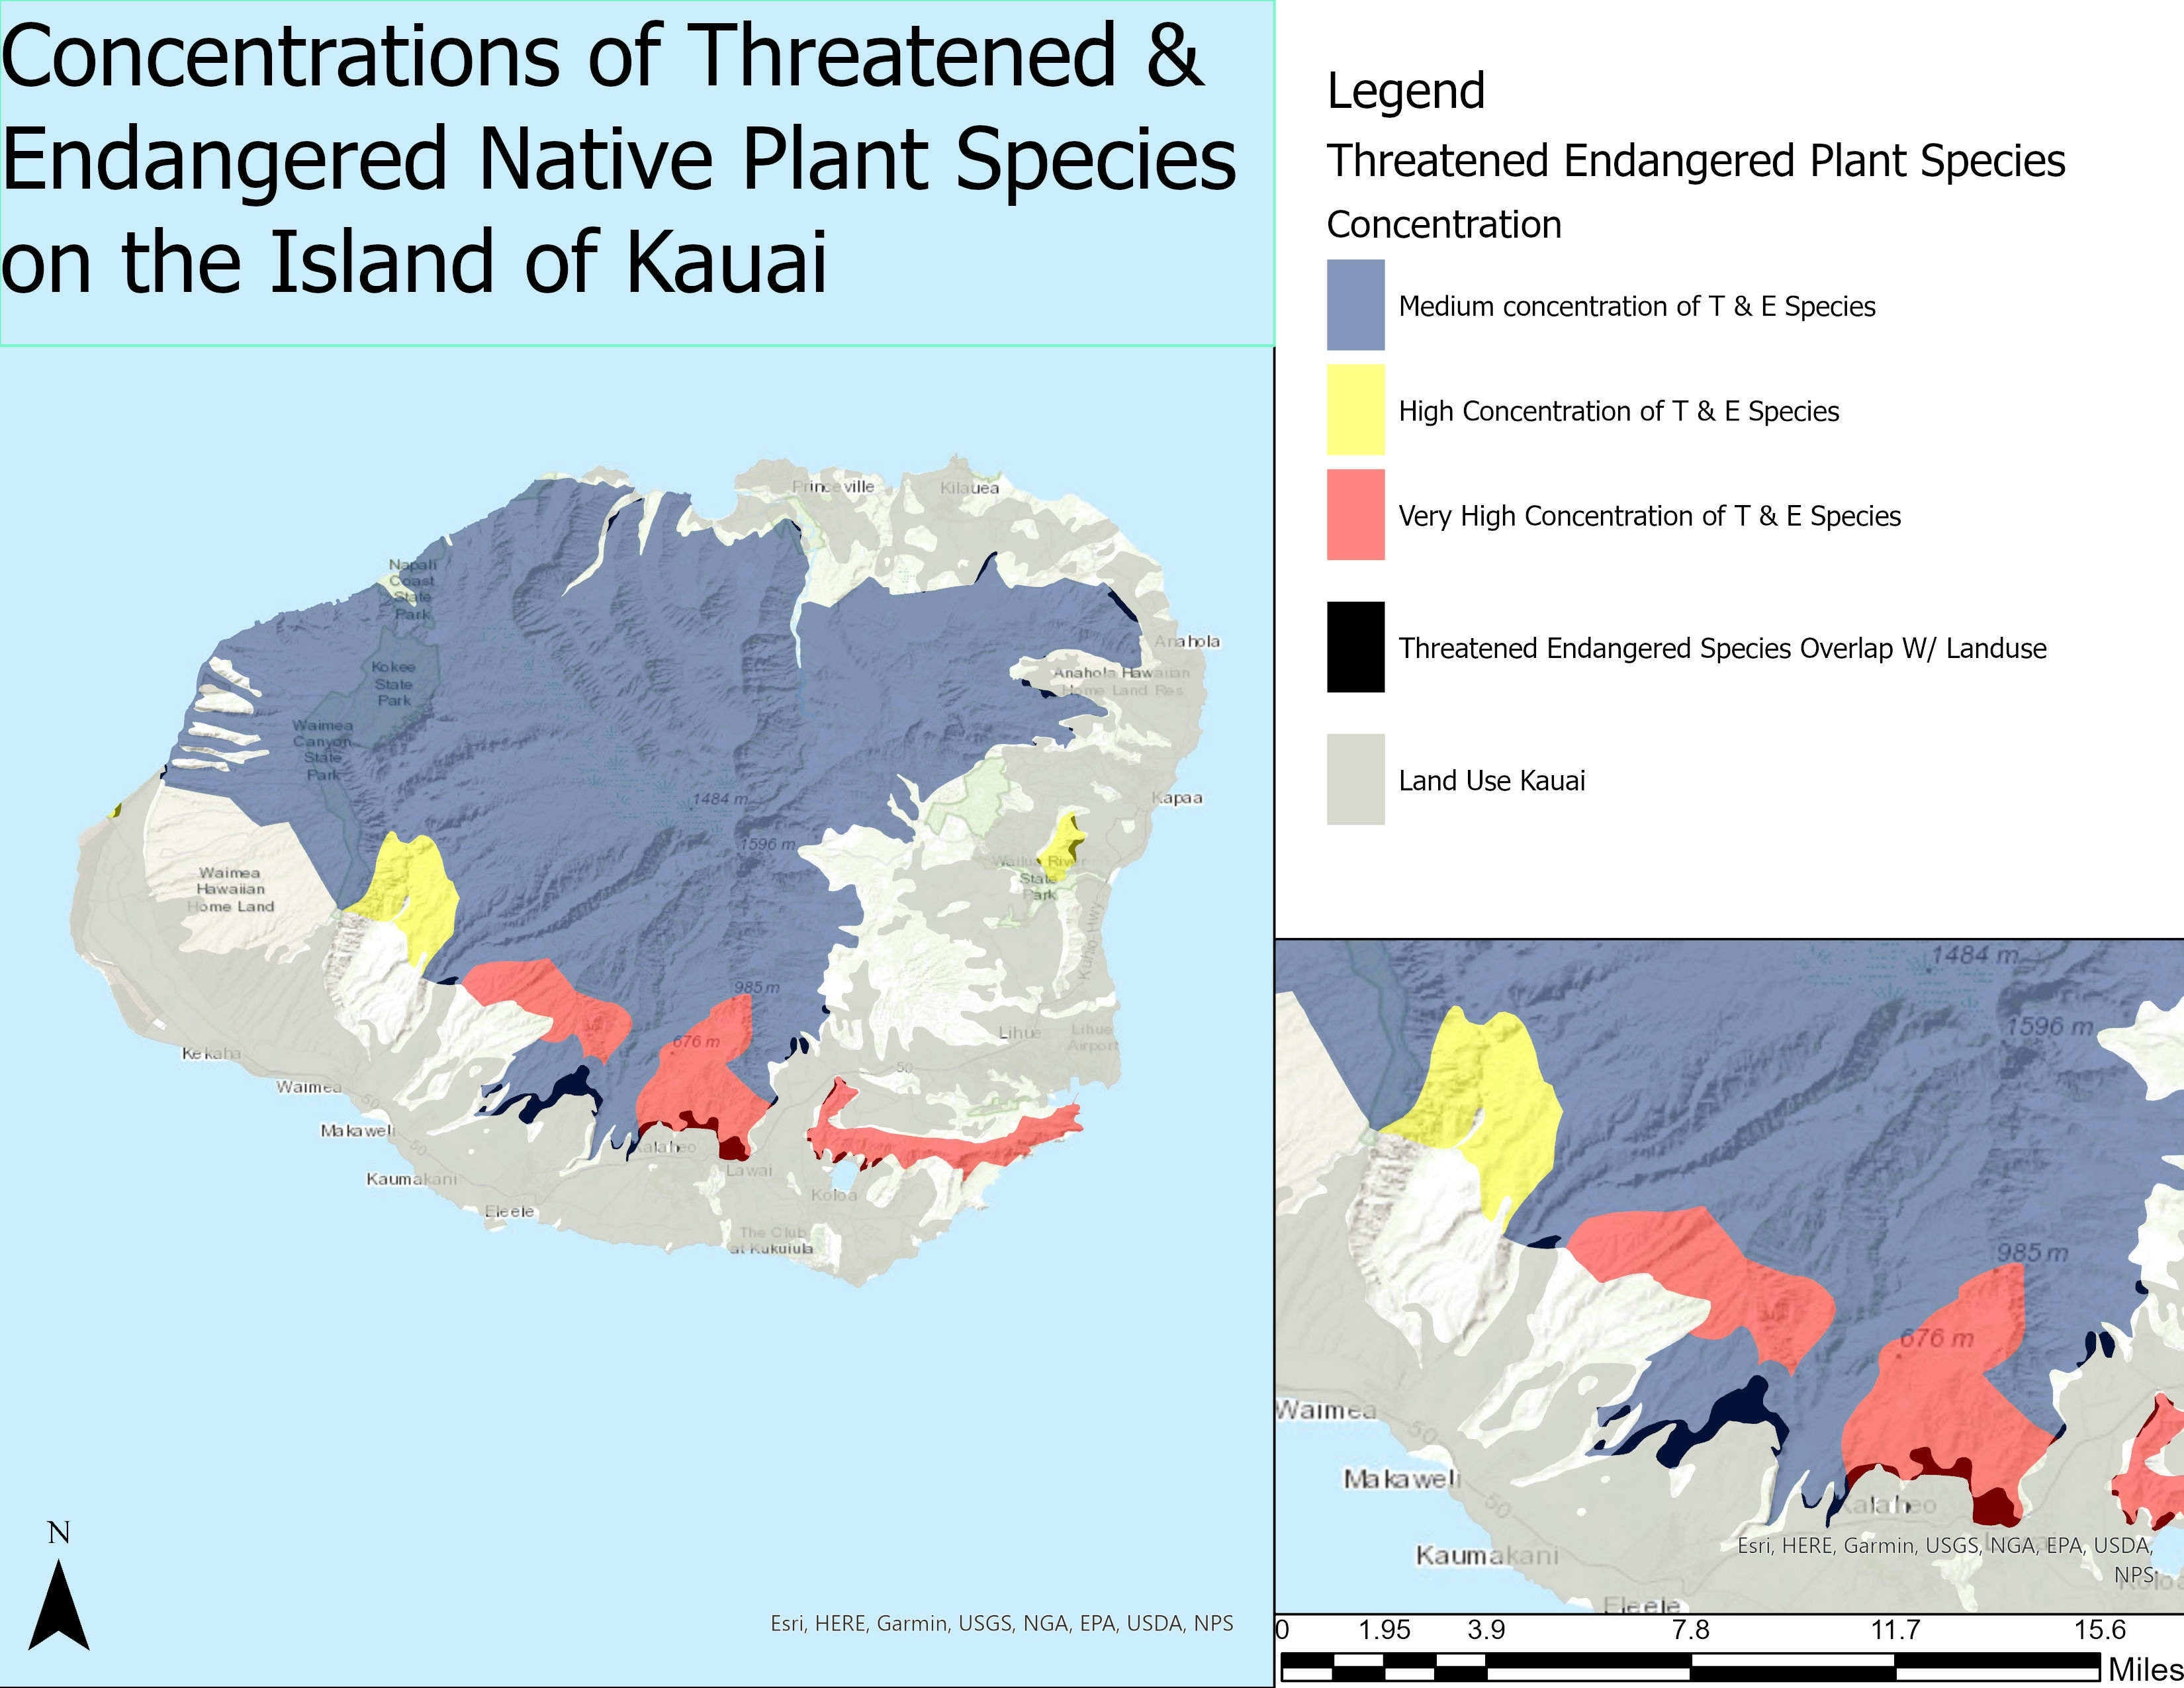 Land Usage, Endangered Species on Kauai